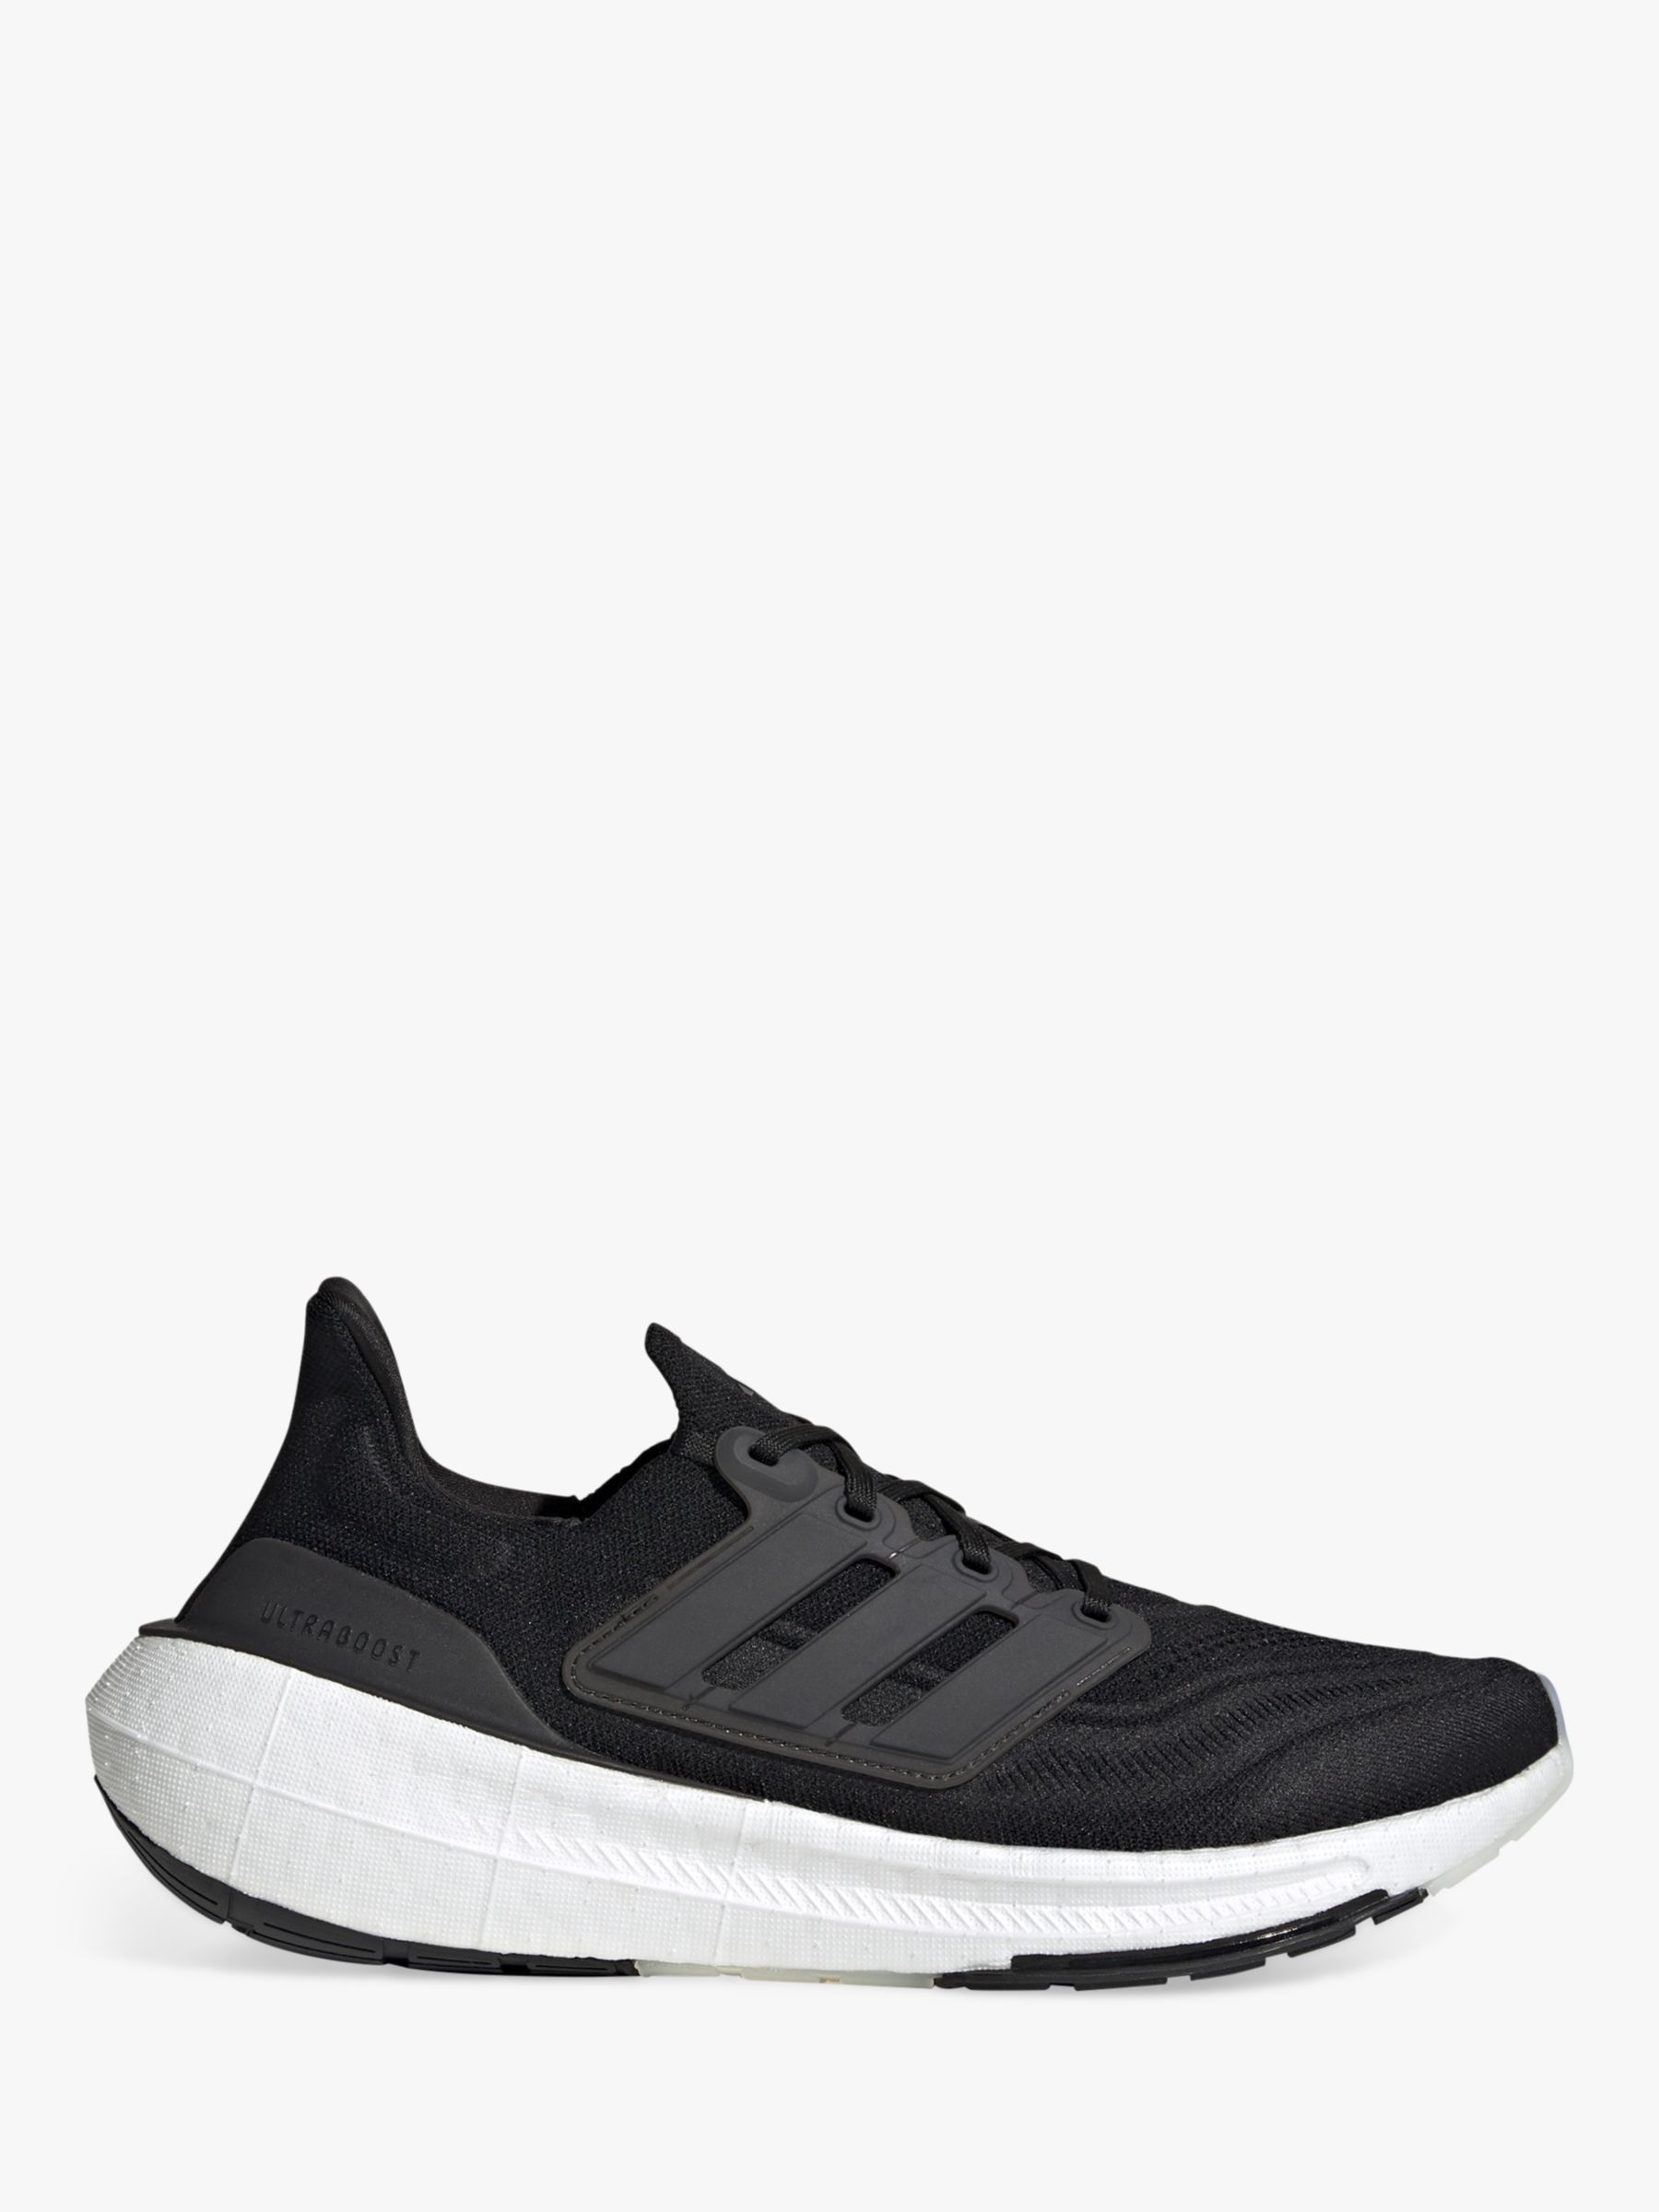 adidas Ultraboost Light Men's Running Shoes, Black/Crystal White at ...